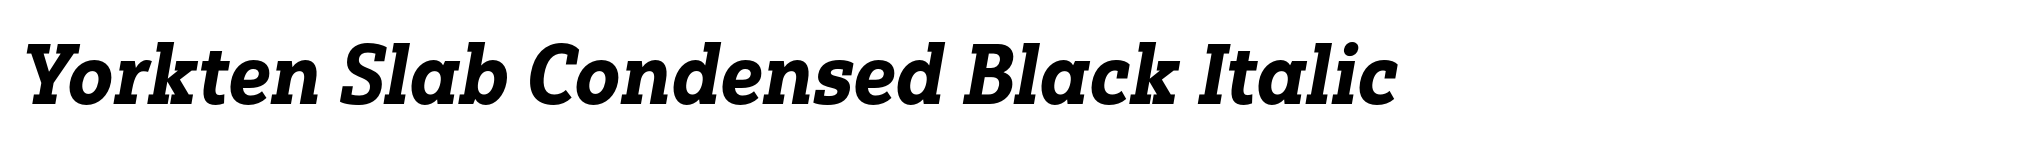 Yorkten Slab Condensed Black Italic image